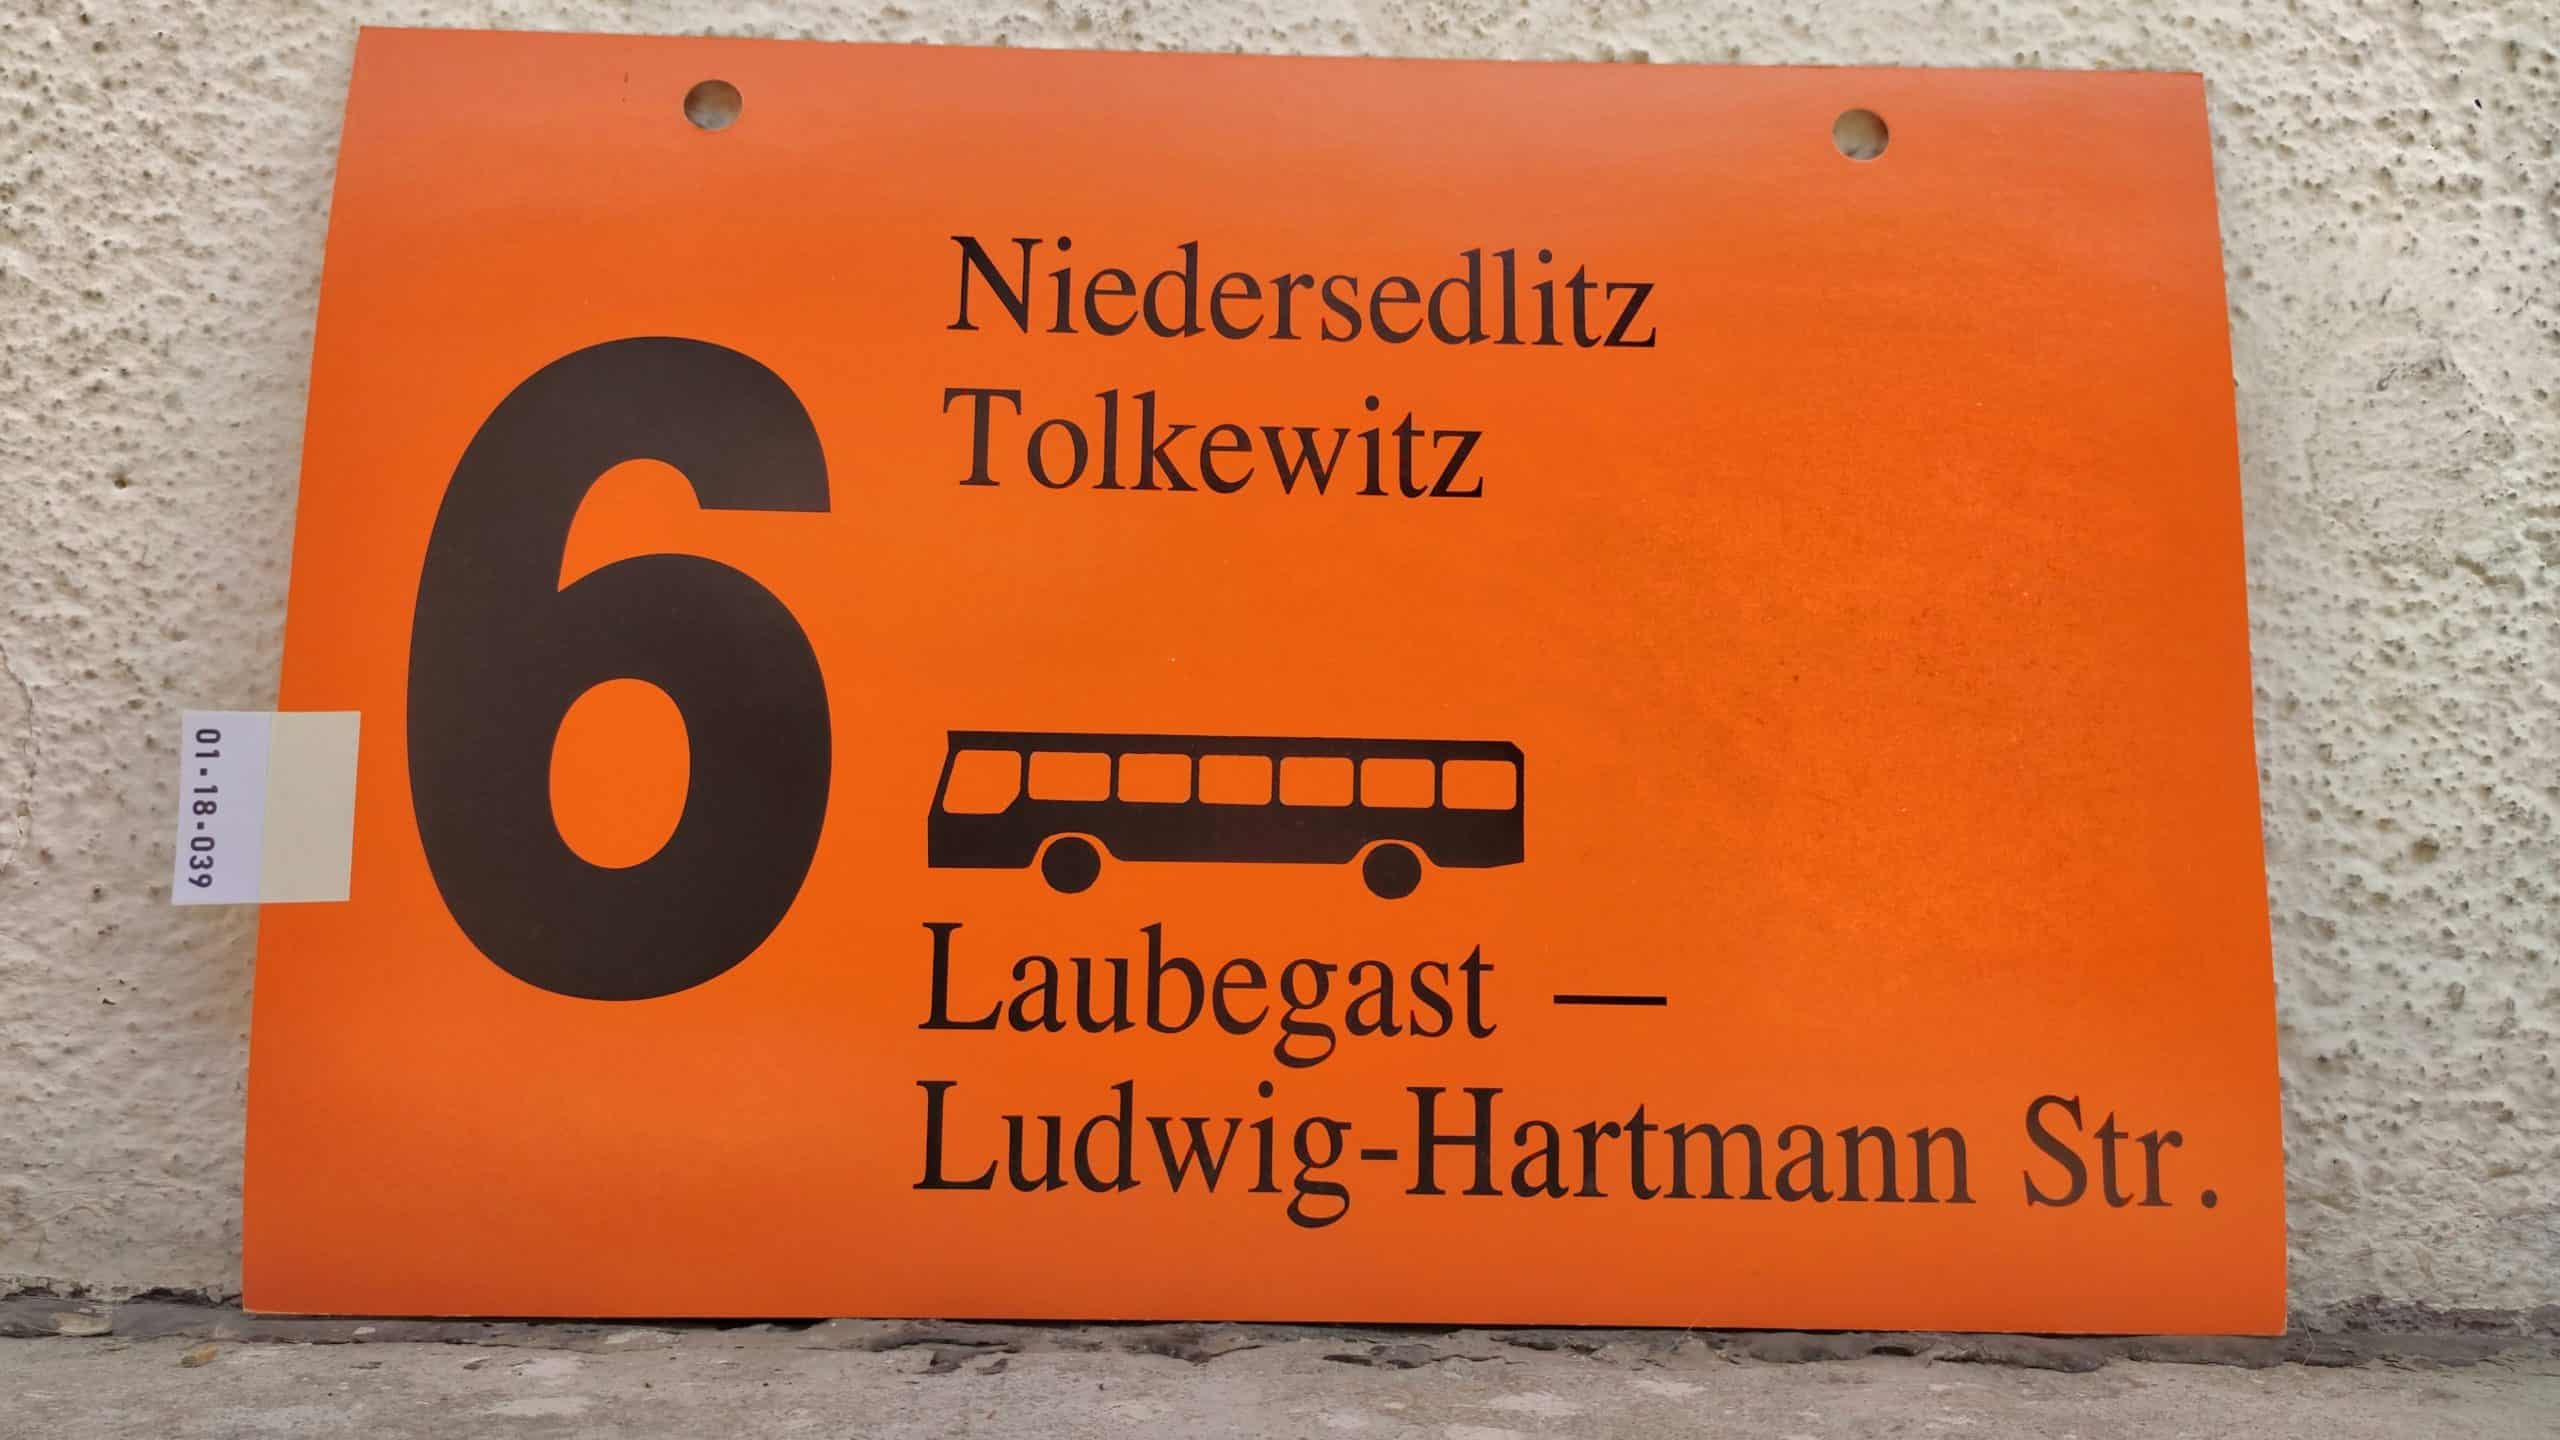 6 Niedersedlitz – Tolkewitz